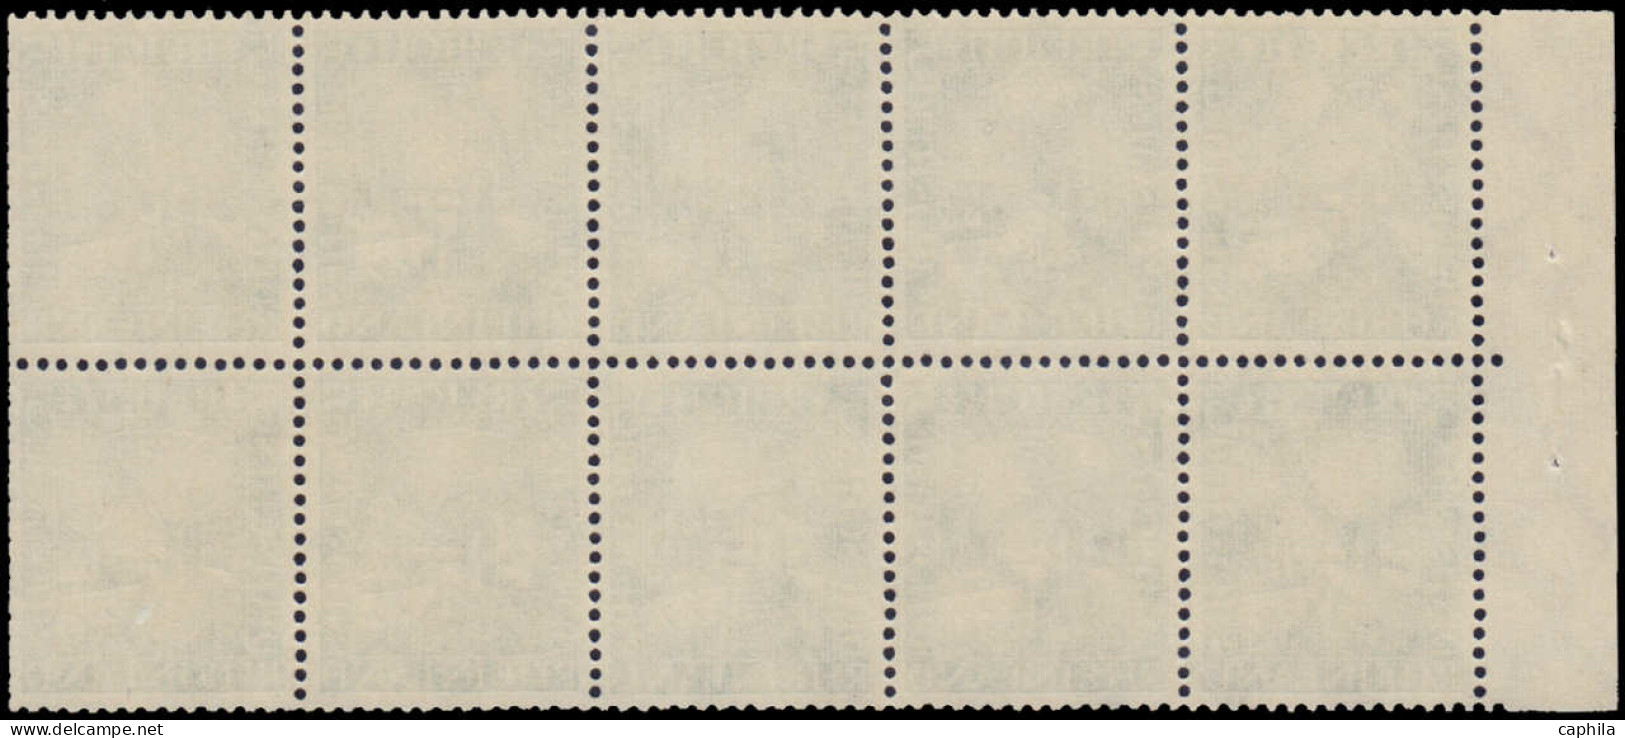 ** ALL. EMPIRE - Carnets - Michel 17 (sans agrafe), complet (1 timbre 5pf. avec un clair): Rheinland